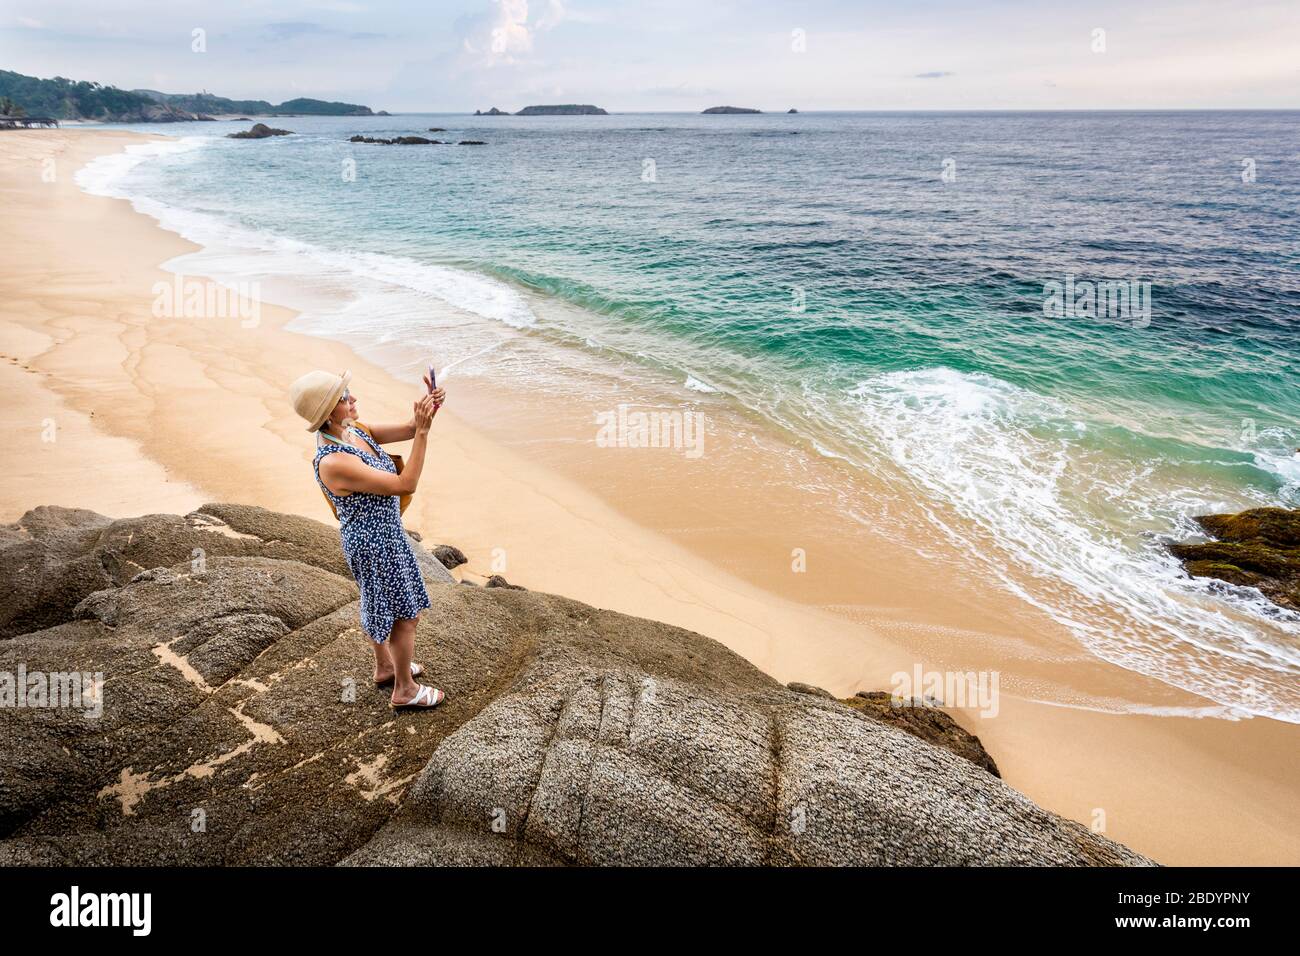 A woman photographs the Palma Sola beach on the Pacific coast of Mexico. Stock Photo